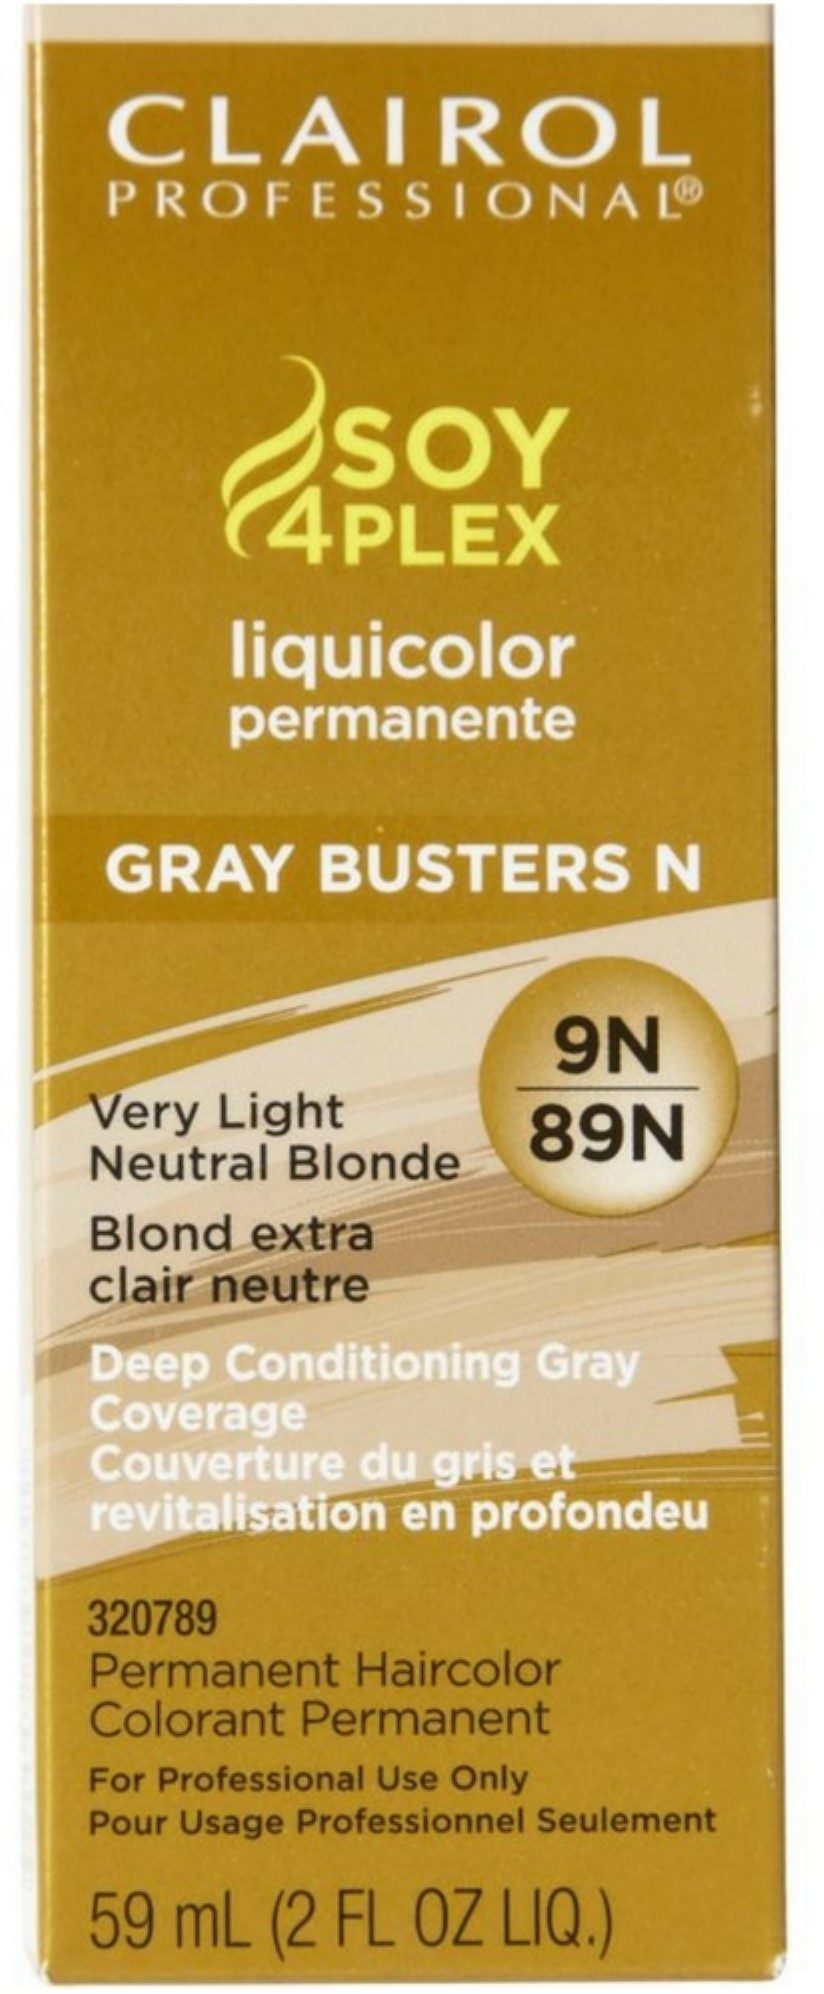 Soy4plex Liquicolor Permanent Hair Color